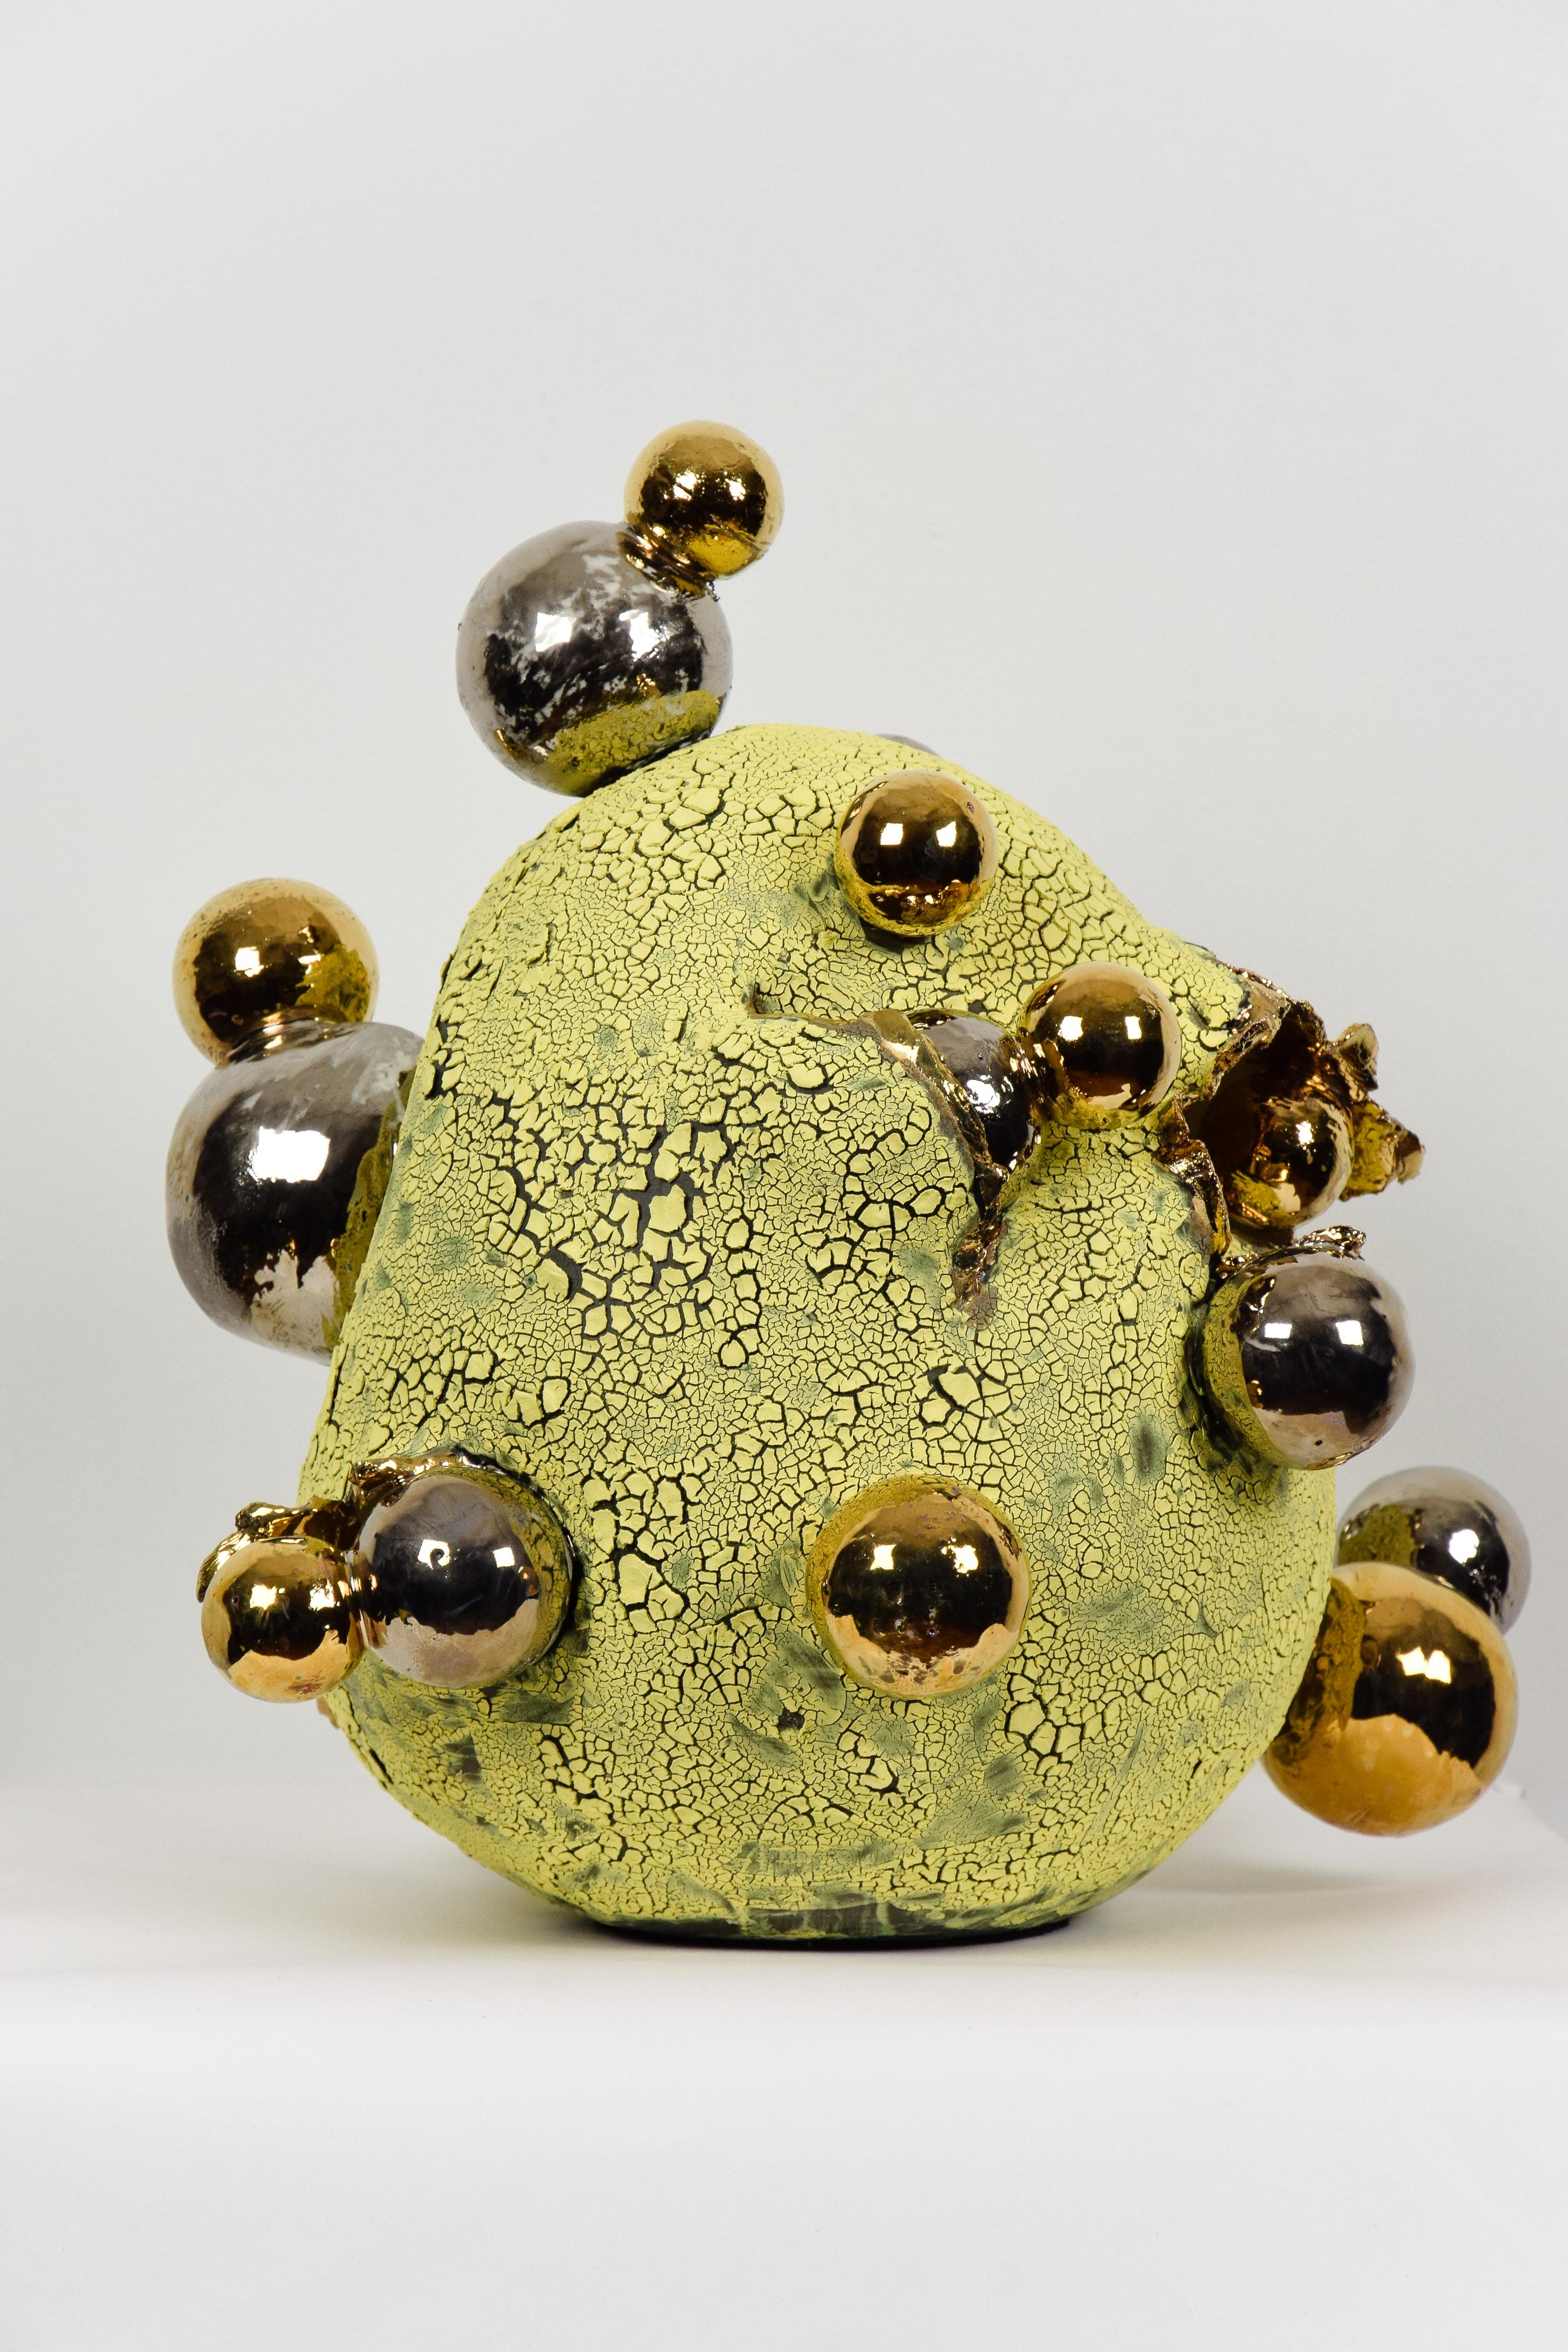 Sunny Side Up Egg by NAM TRAN - Ceramic, Sculptor, Contemporary, Egg - Gold Figurative Sculpture by Nam Tran